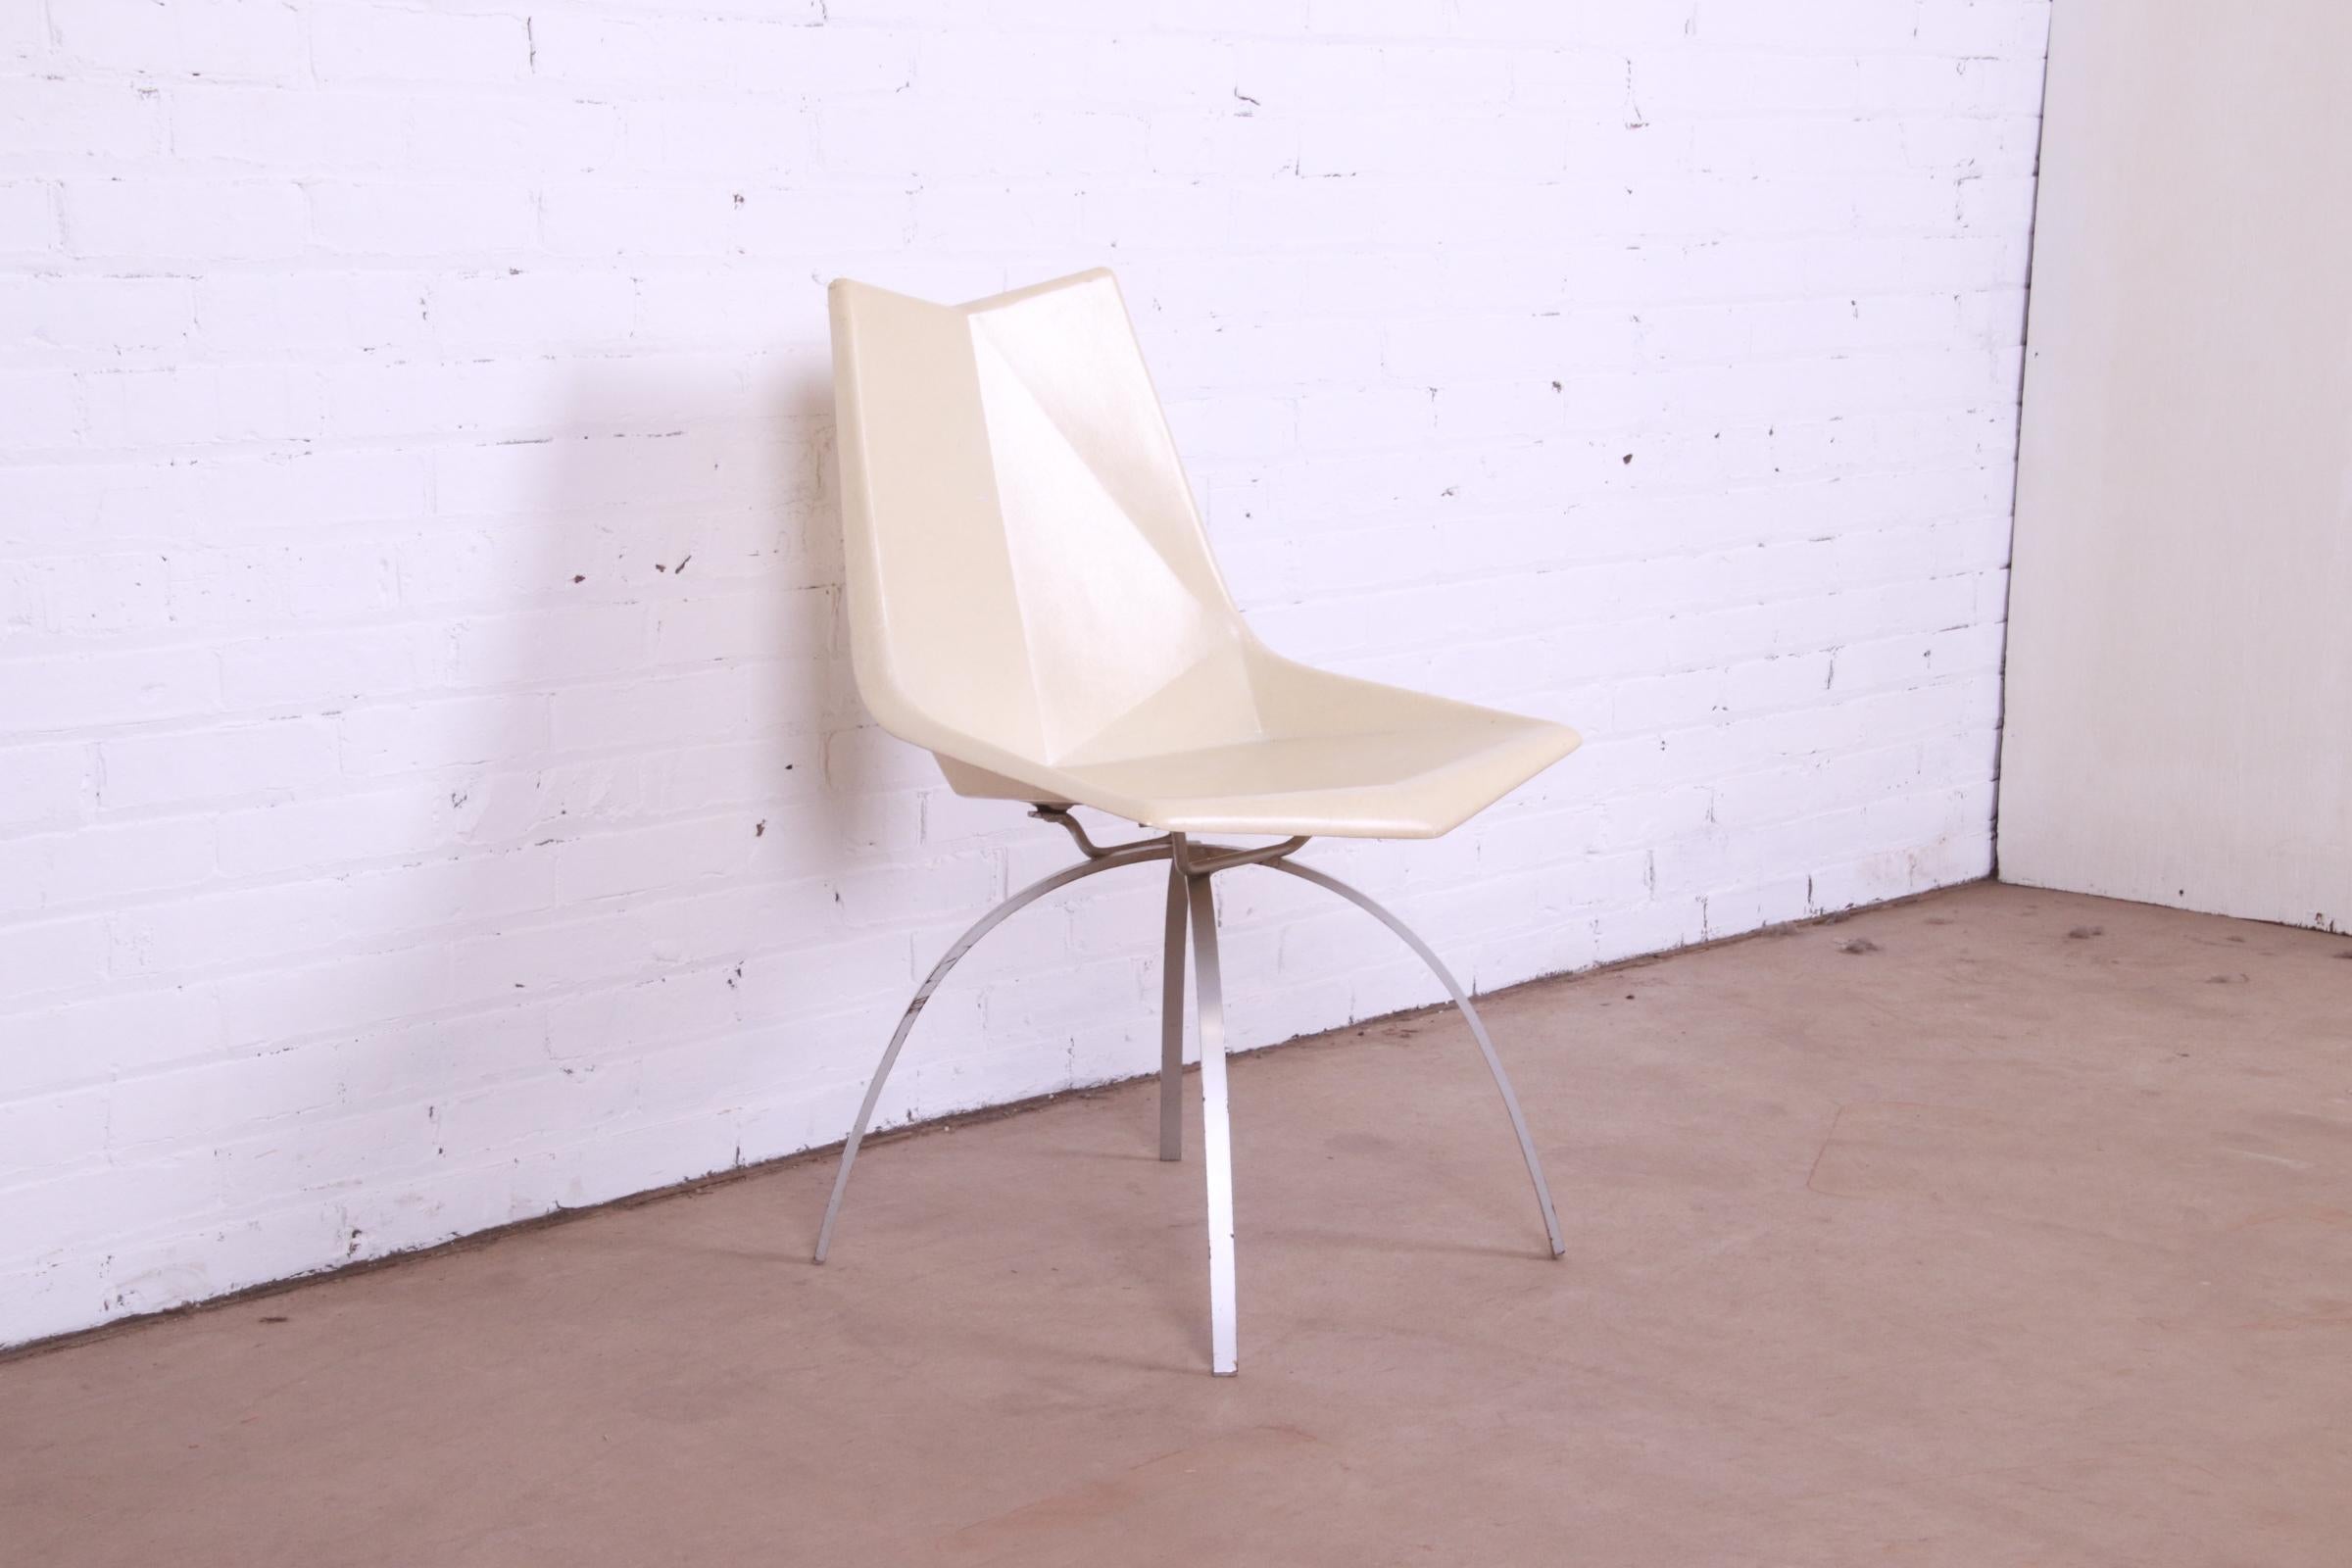 Paul McCobb Mid-Century Modern Fiberglass Origami Chair on Spider Base, 1950s For Sale 1